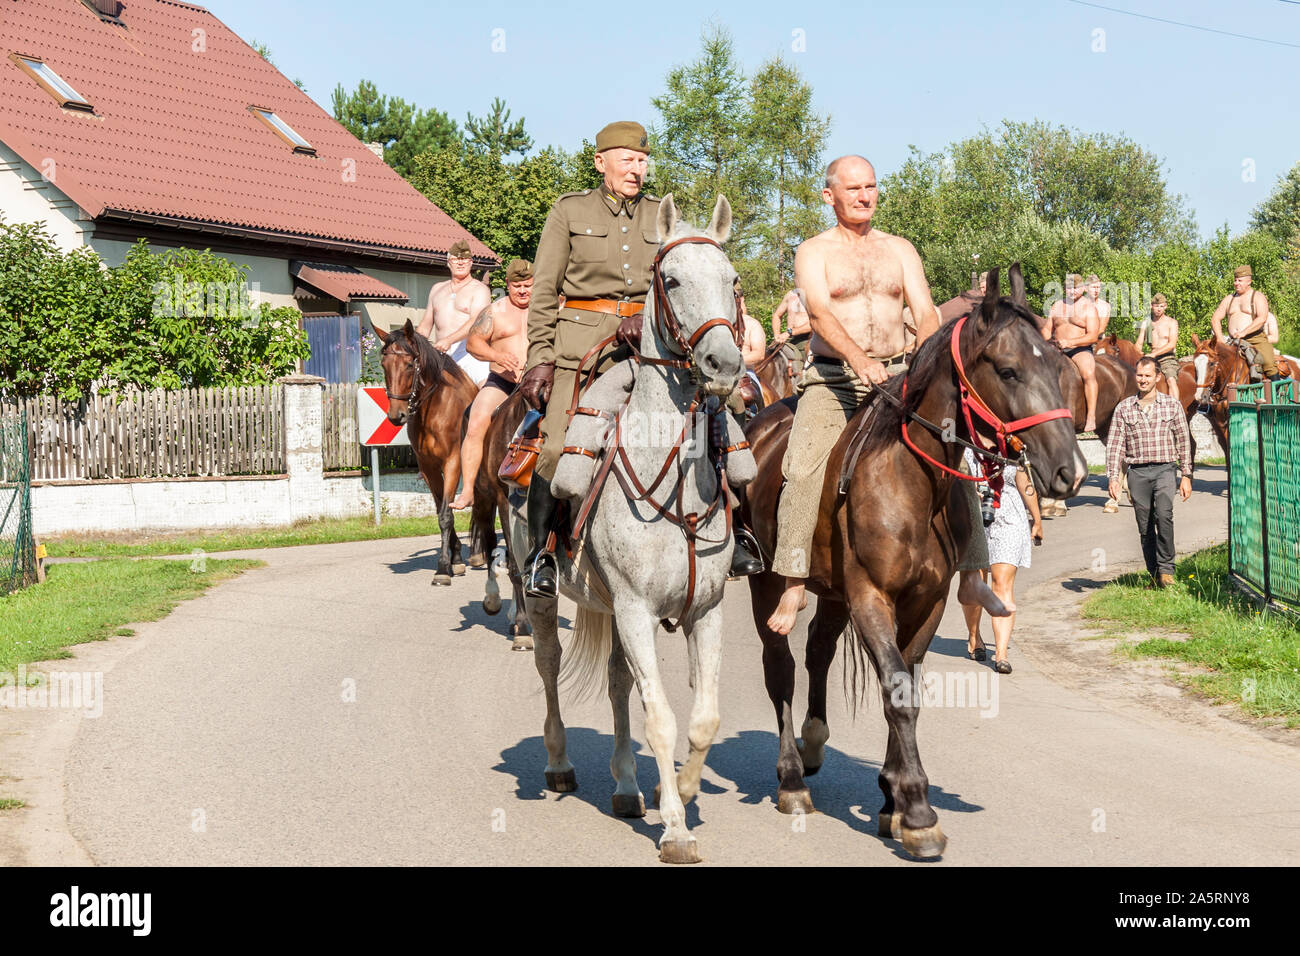 Kalety, Poland - August 31, 2019: Historic Third Silesian Uhlan Regiment on horses on august 31, 2019 in Kalety - Zielona, Poland, Silesia. Stock Photo